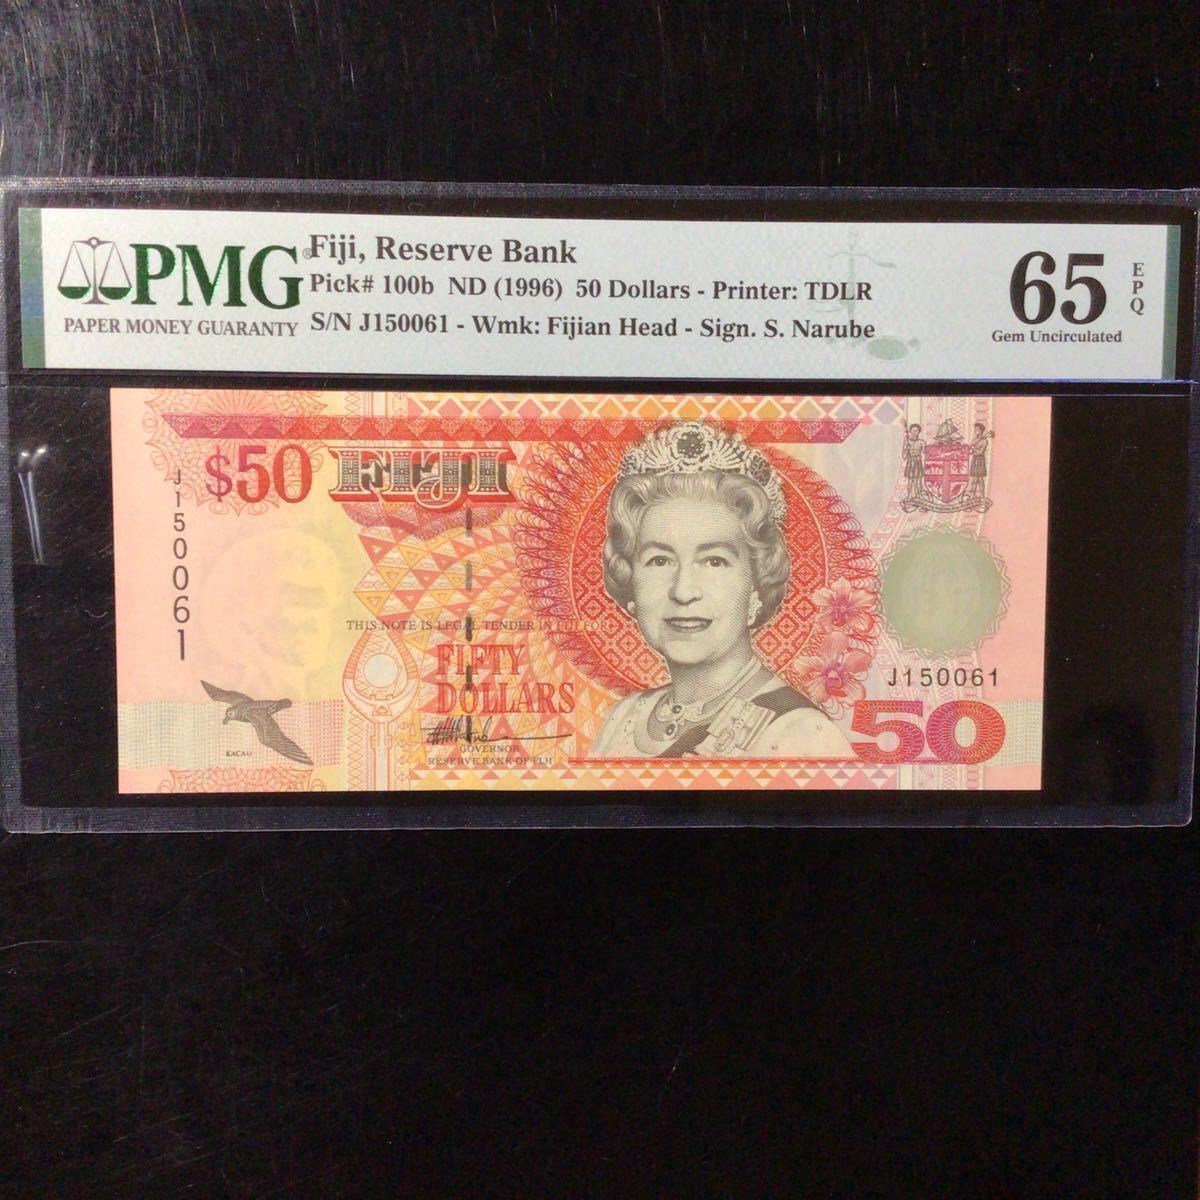 World Banknote Grading FIJI《 Reserve Bank 》50 Dollars【1996】『PMG Grading Gem Uncirculated 65 EPQ』